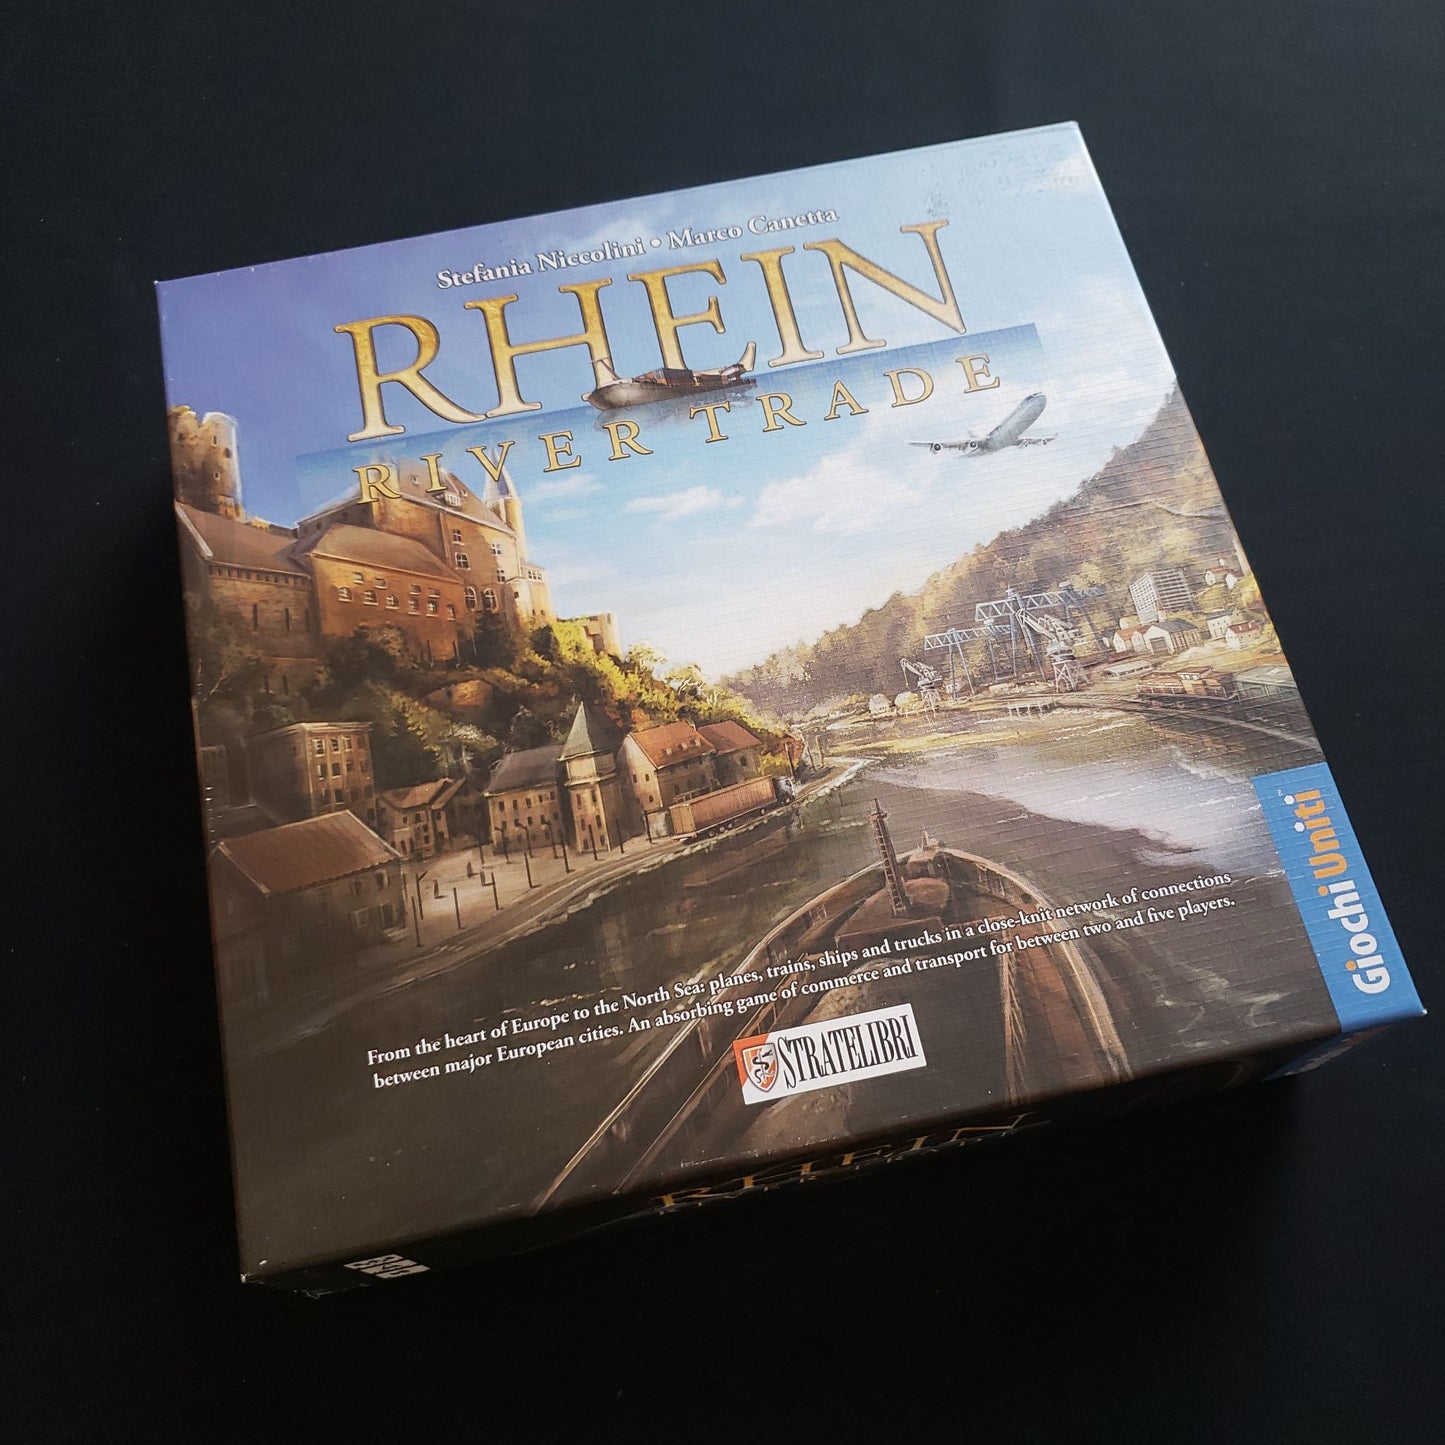 Rhein: River Trade board game - front cover of box